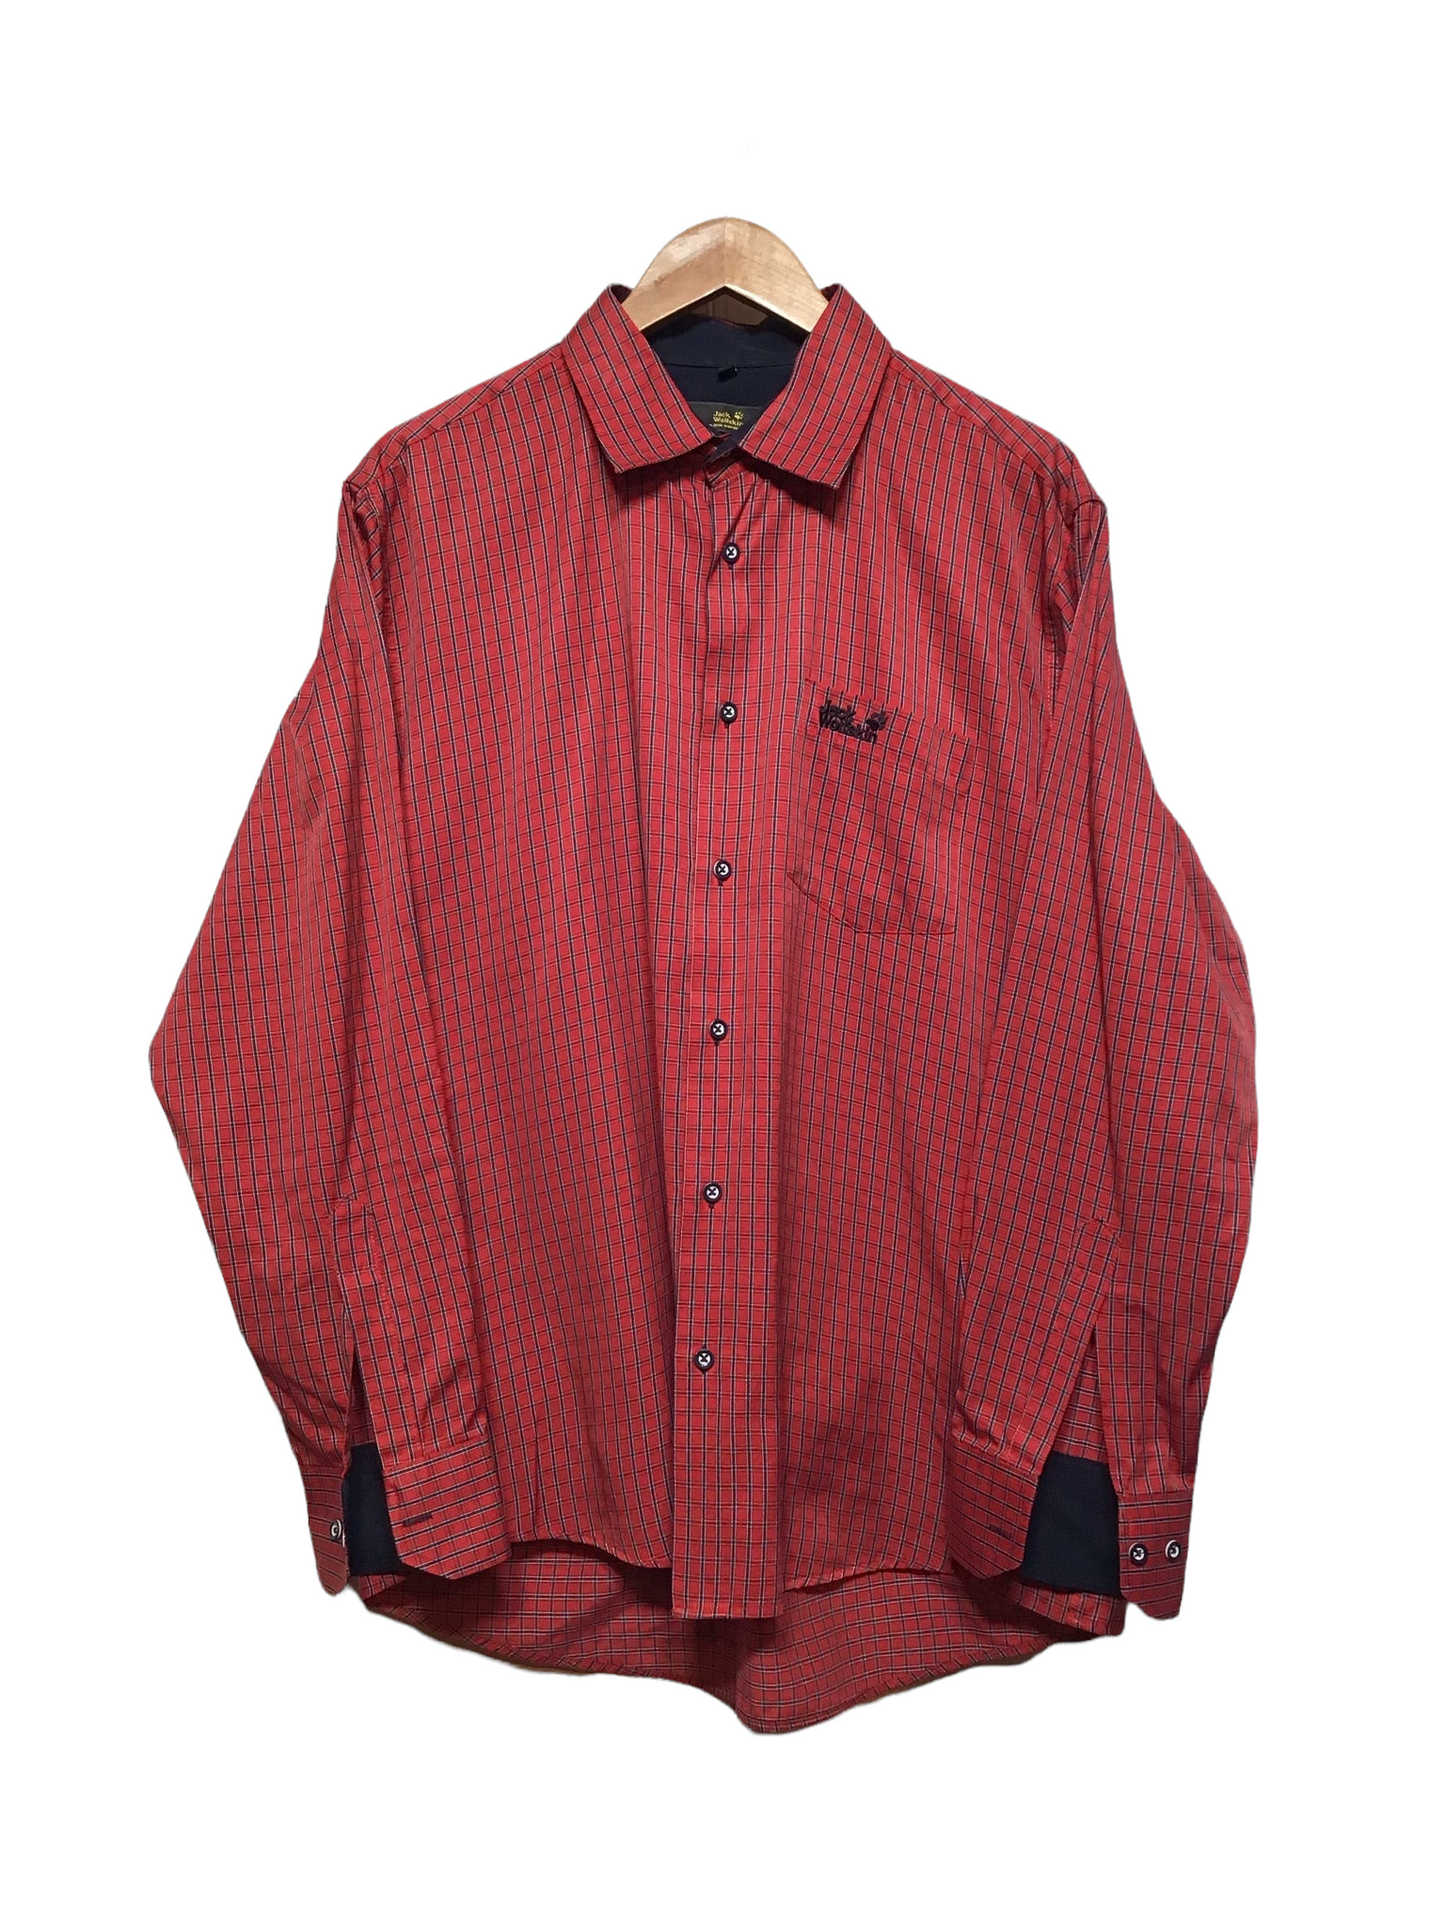 Jack Wolfskin Chequered Shirt (Size XL)